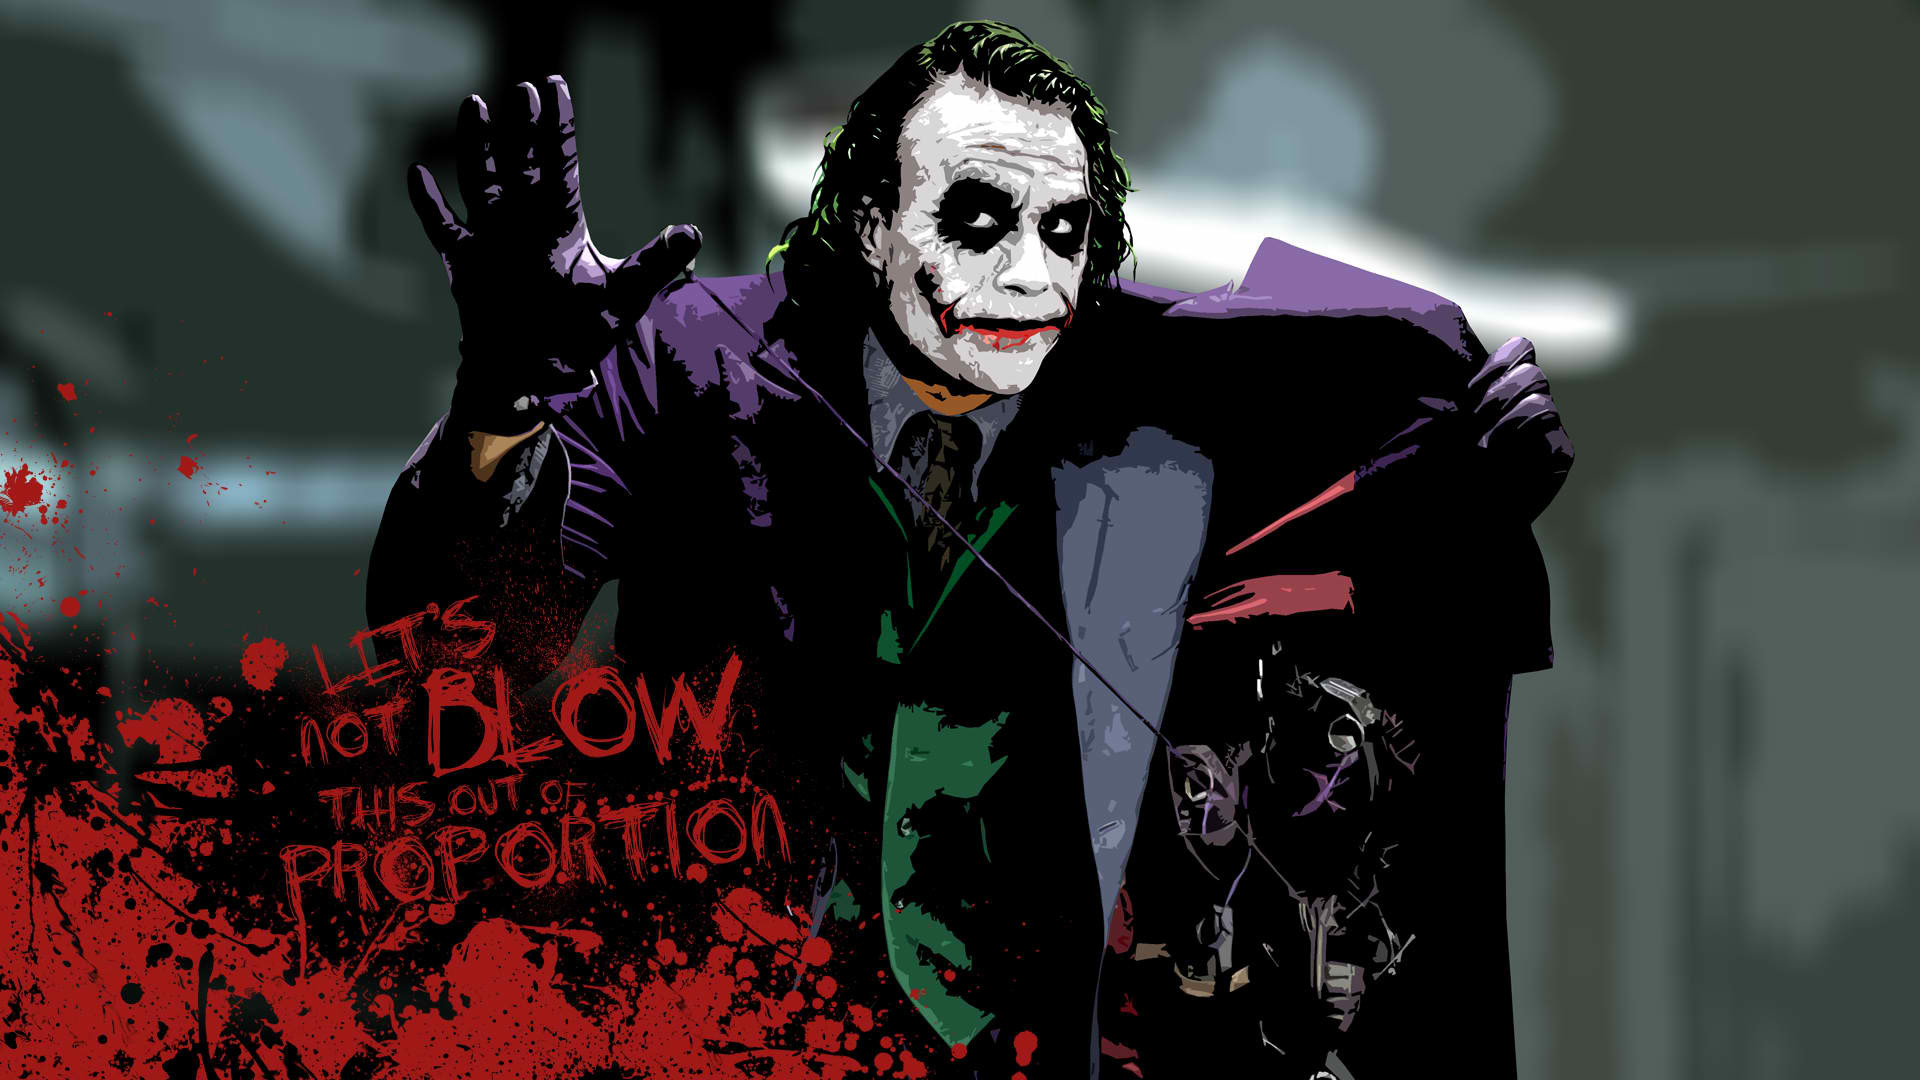 Harley joker hd wallpapers 1080p – photo . Joker Wallpapers High Quality Download Free